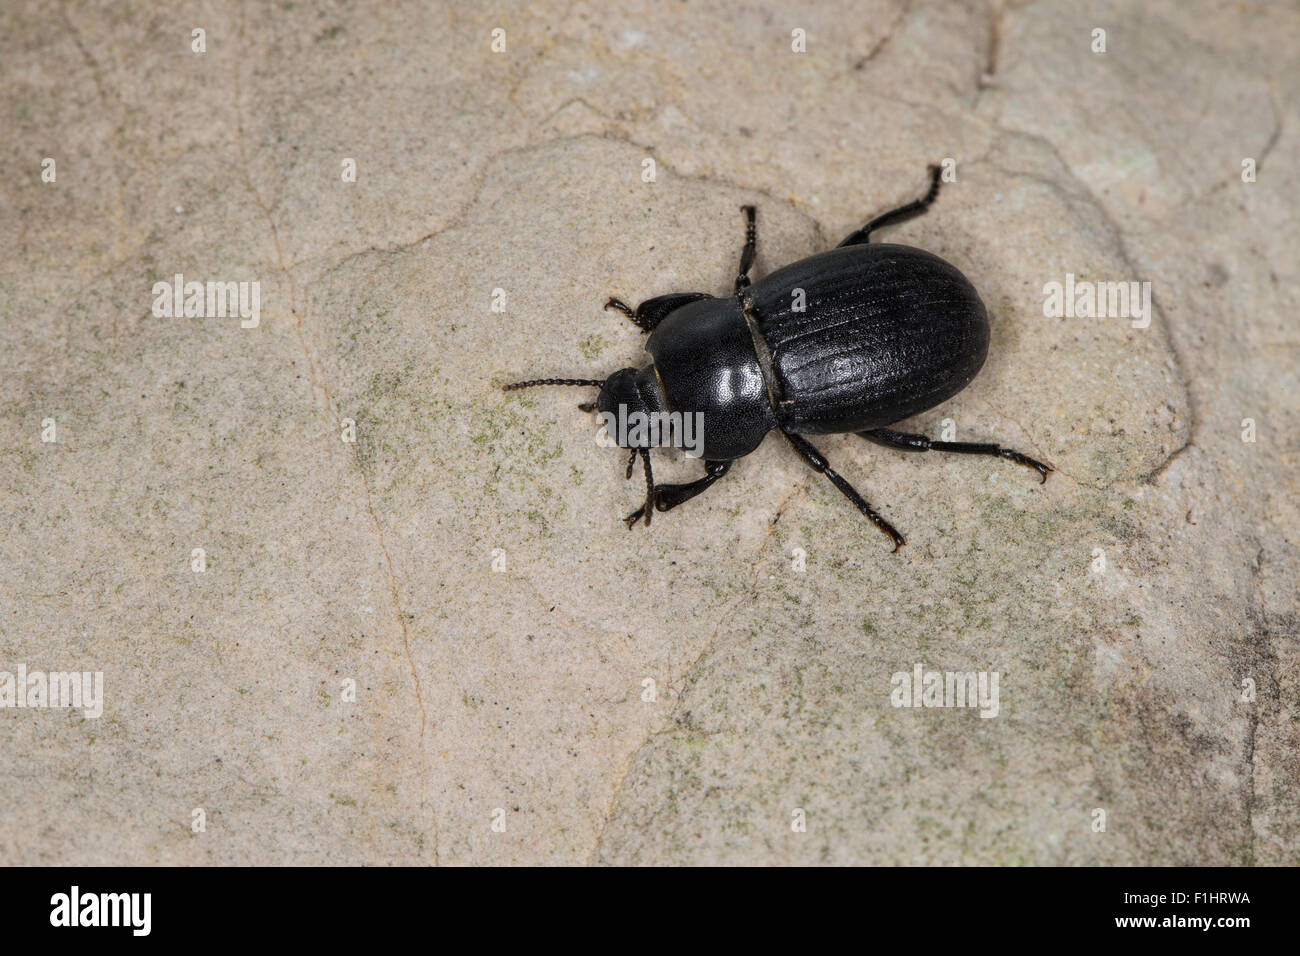 Darkling beetle, Schwarzkäfer, Bioplanes meridionalis, ténébrionidés, coléoptères darkling Banque D'Images